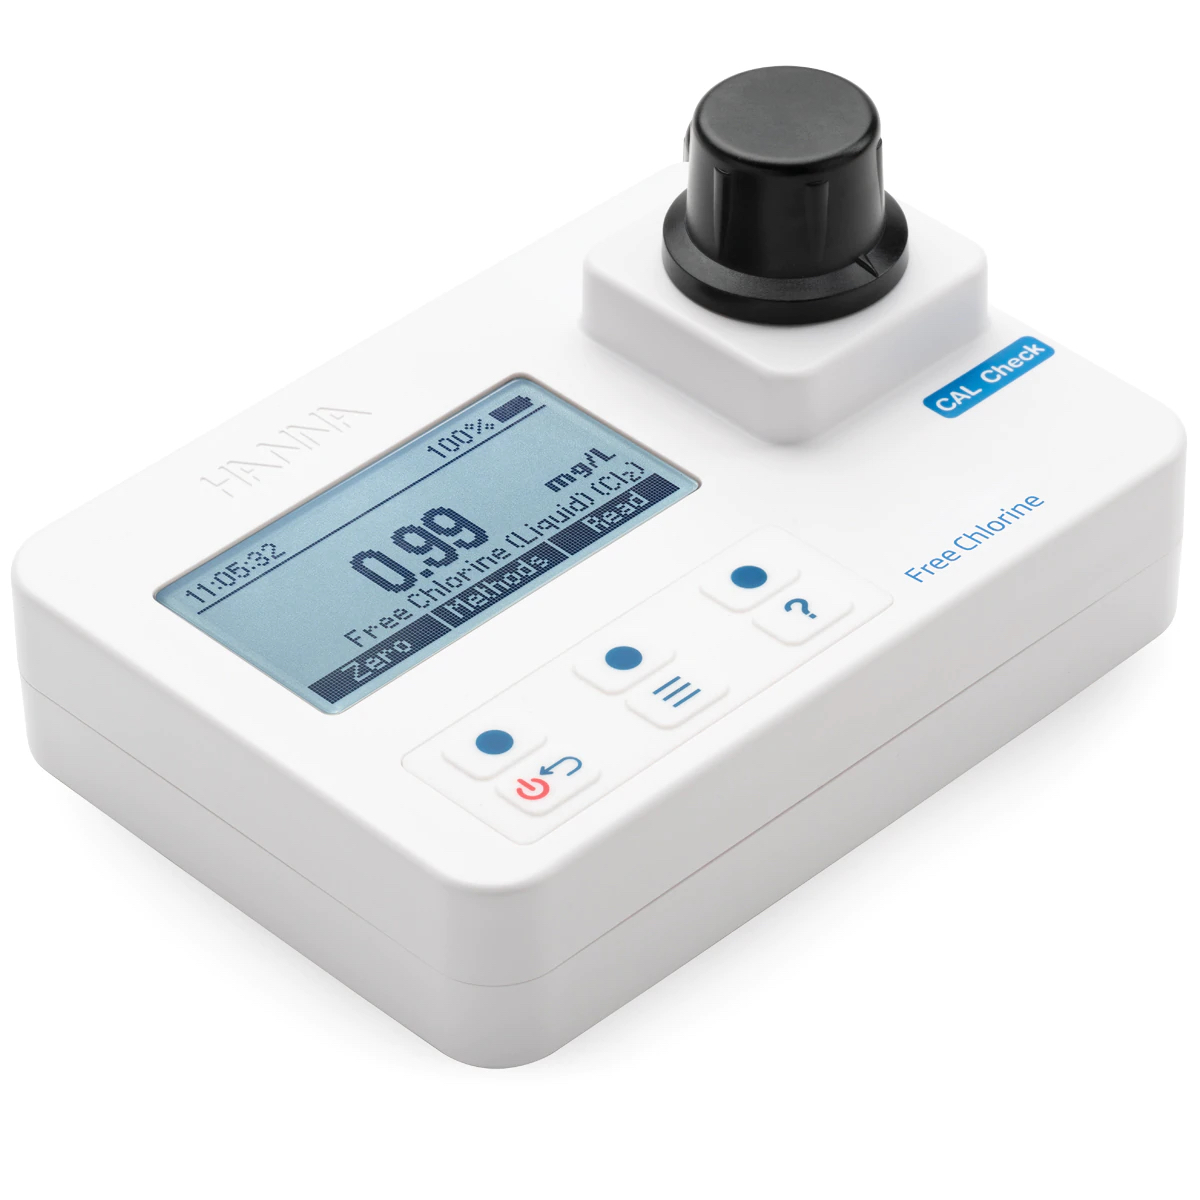 Free Chlorine Portable Photometer with CAL Check - HI97701